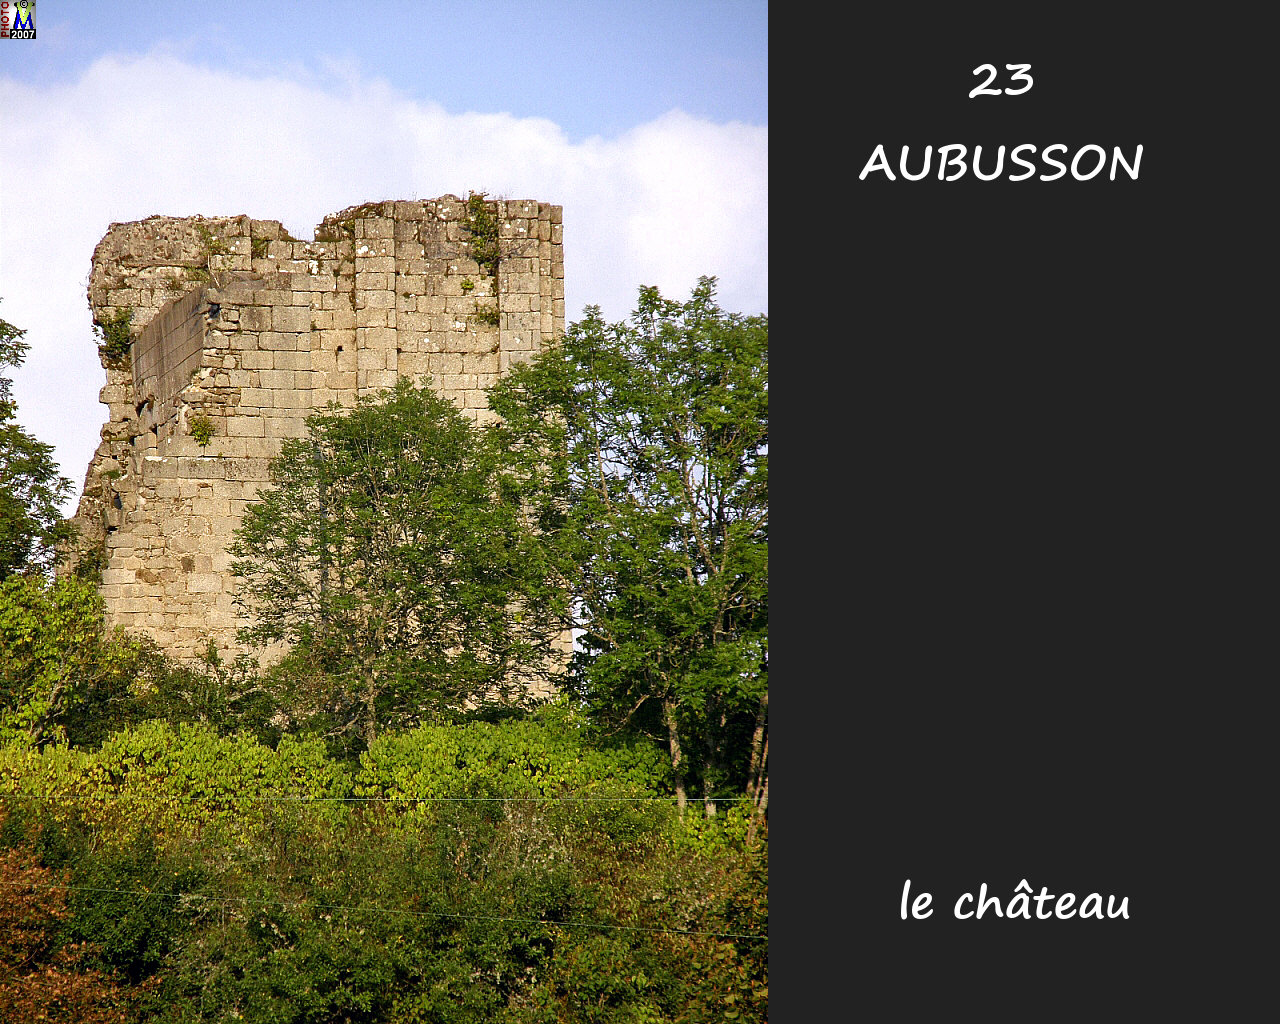 23AUBUSSON_chateau_100.jpg